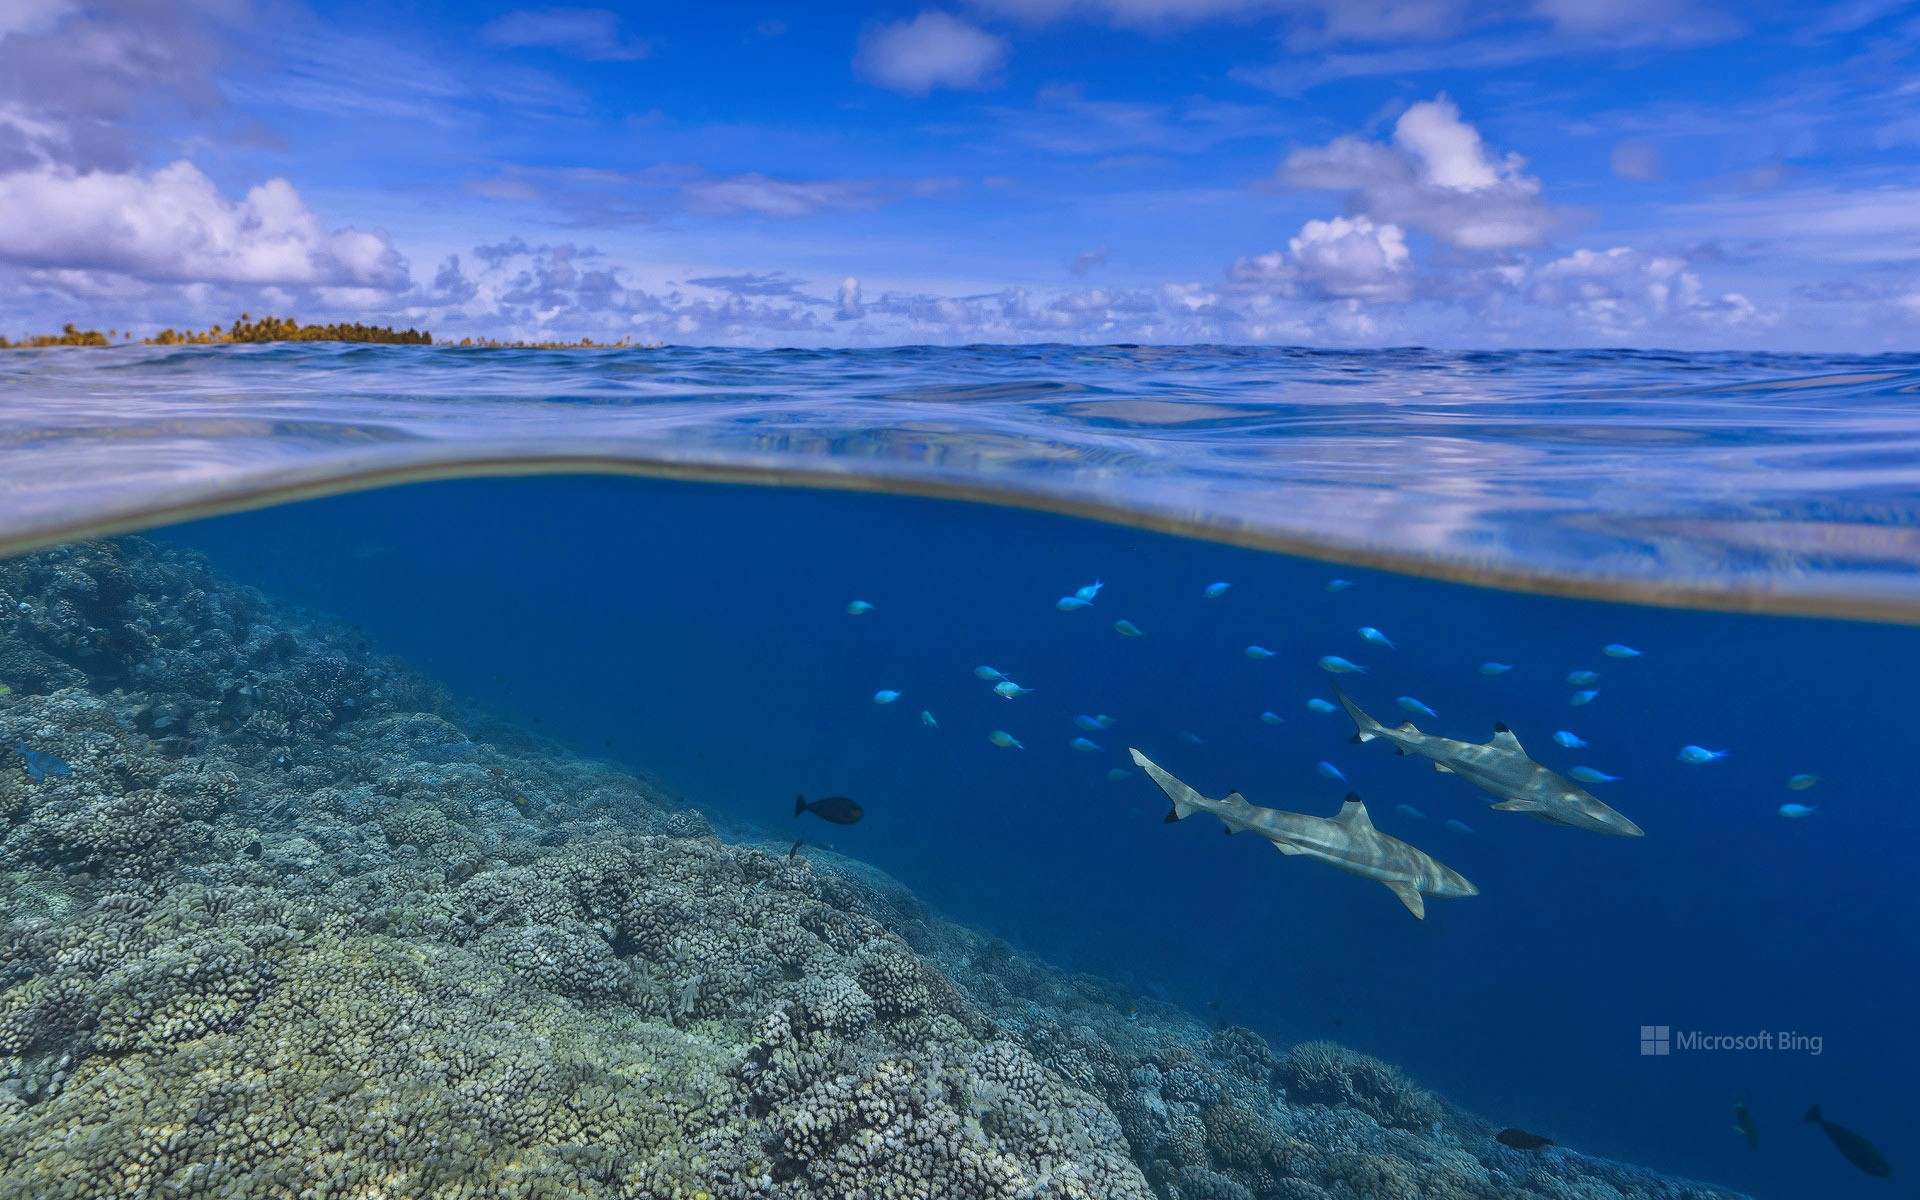 Blacktip reef sharks off the coast of Tahiti, French Polynesia